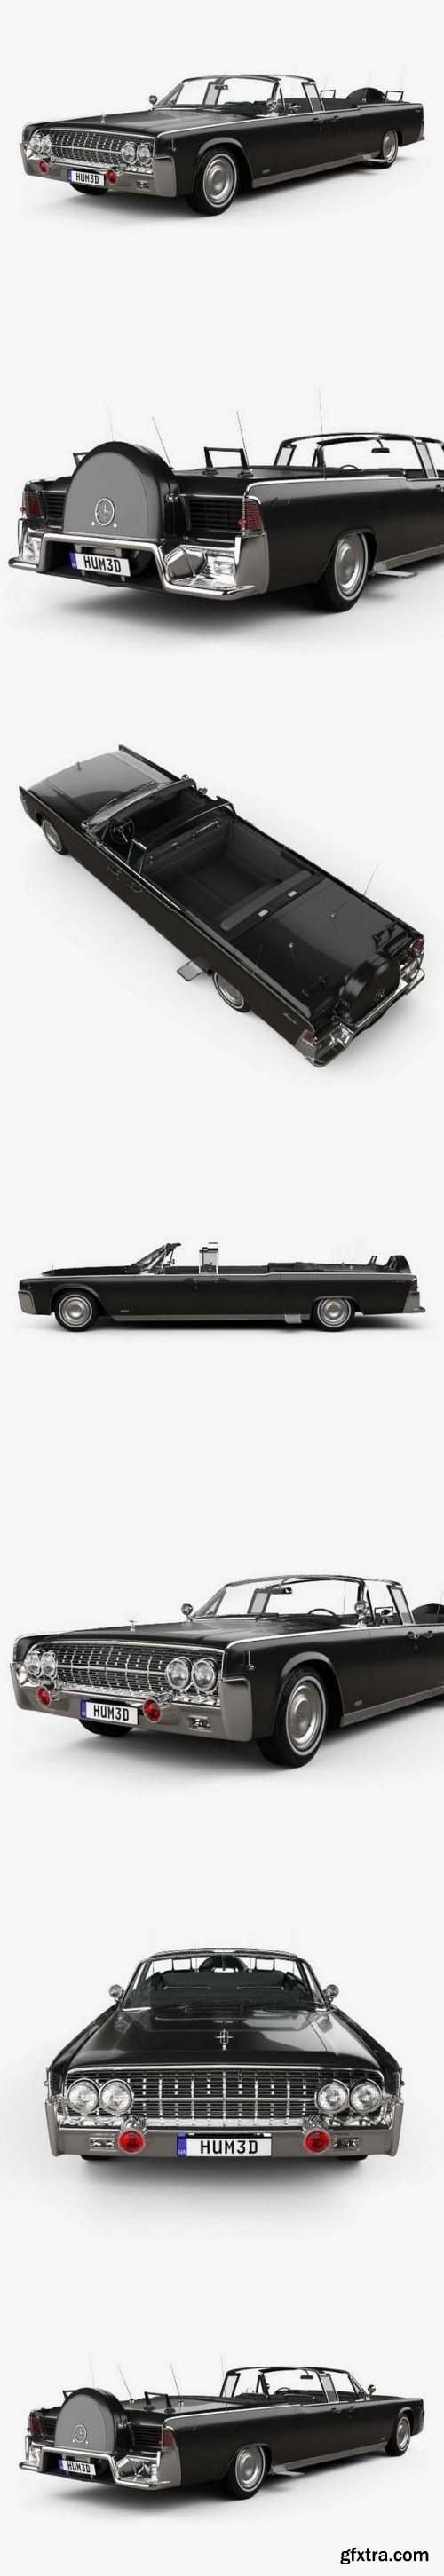 Lincoln Continental X-100 1961